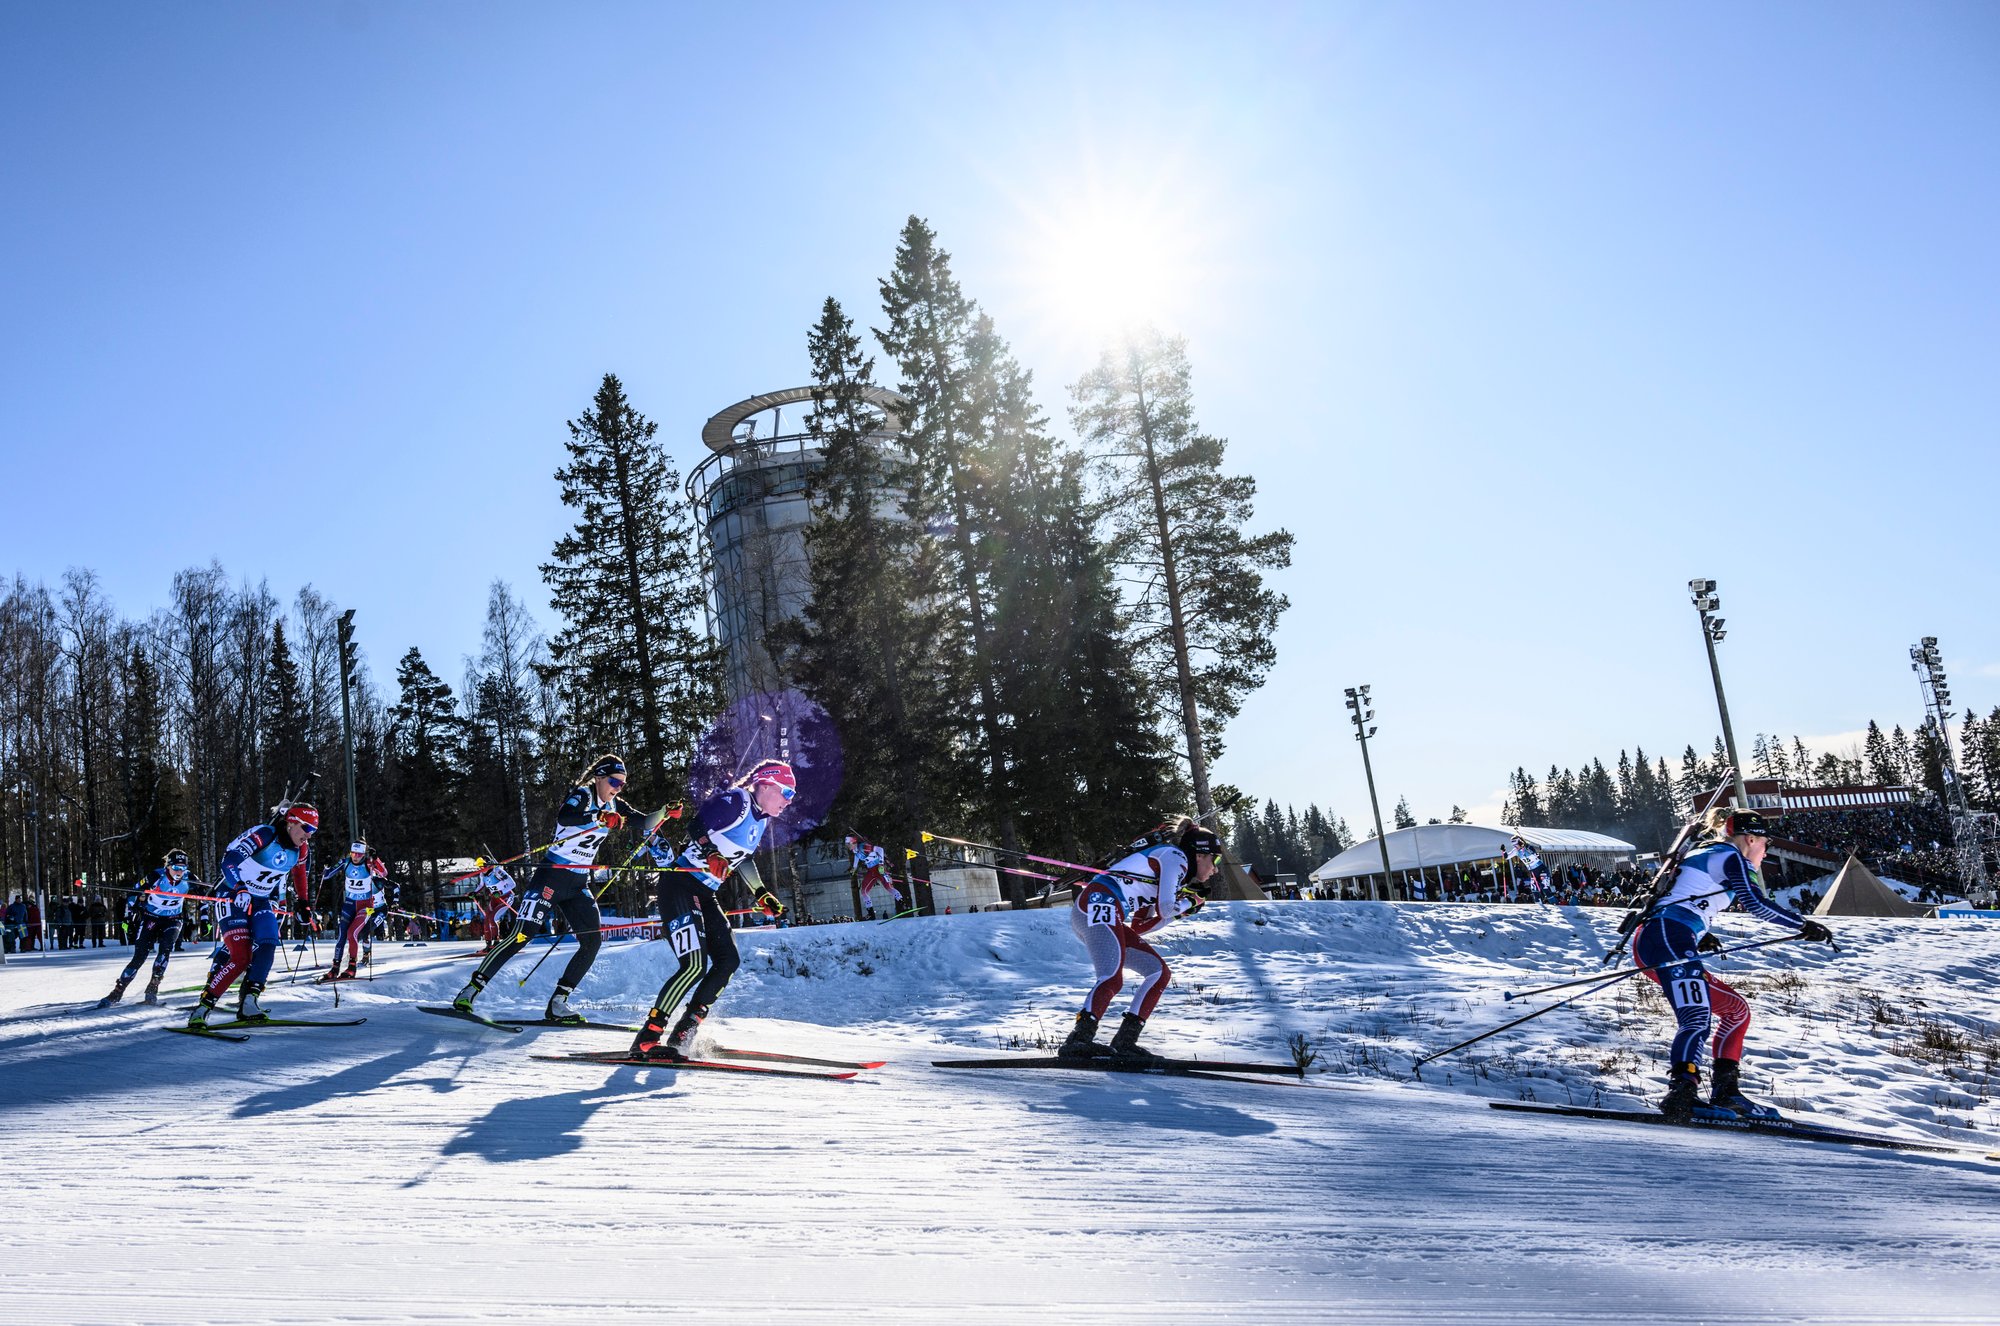 LaVita energises winter sports with new sponsorship agreements